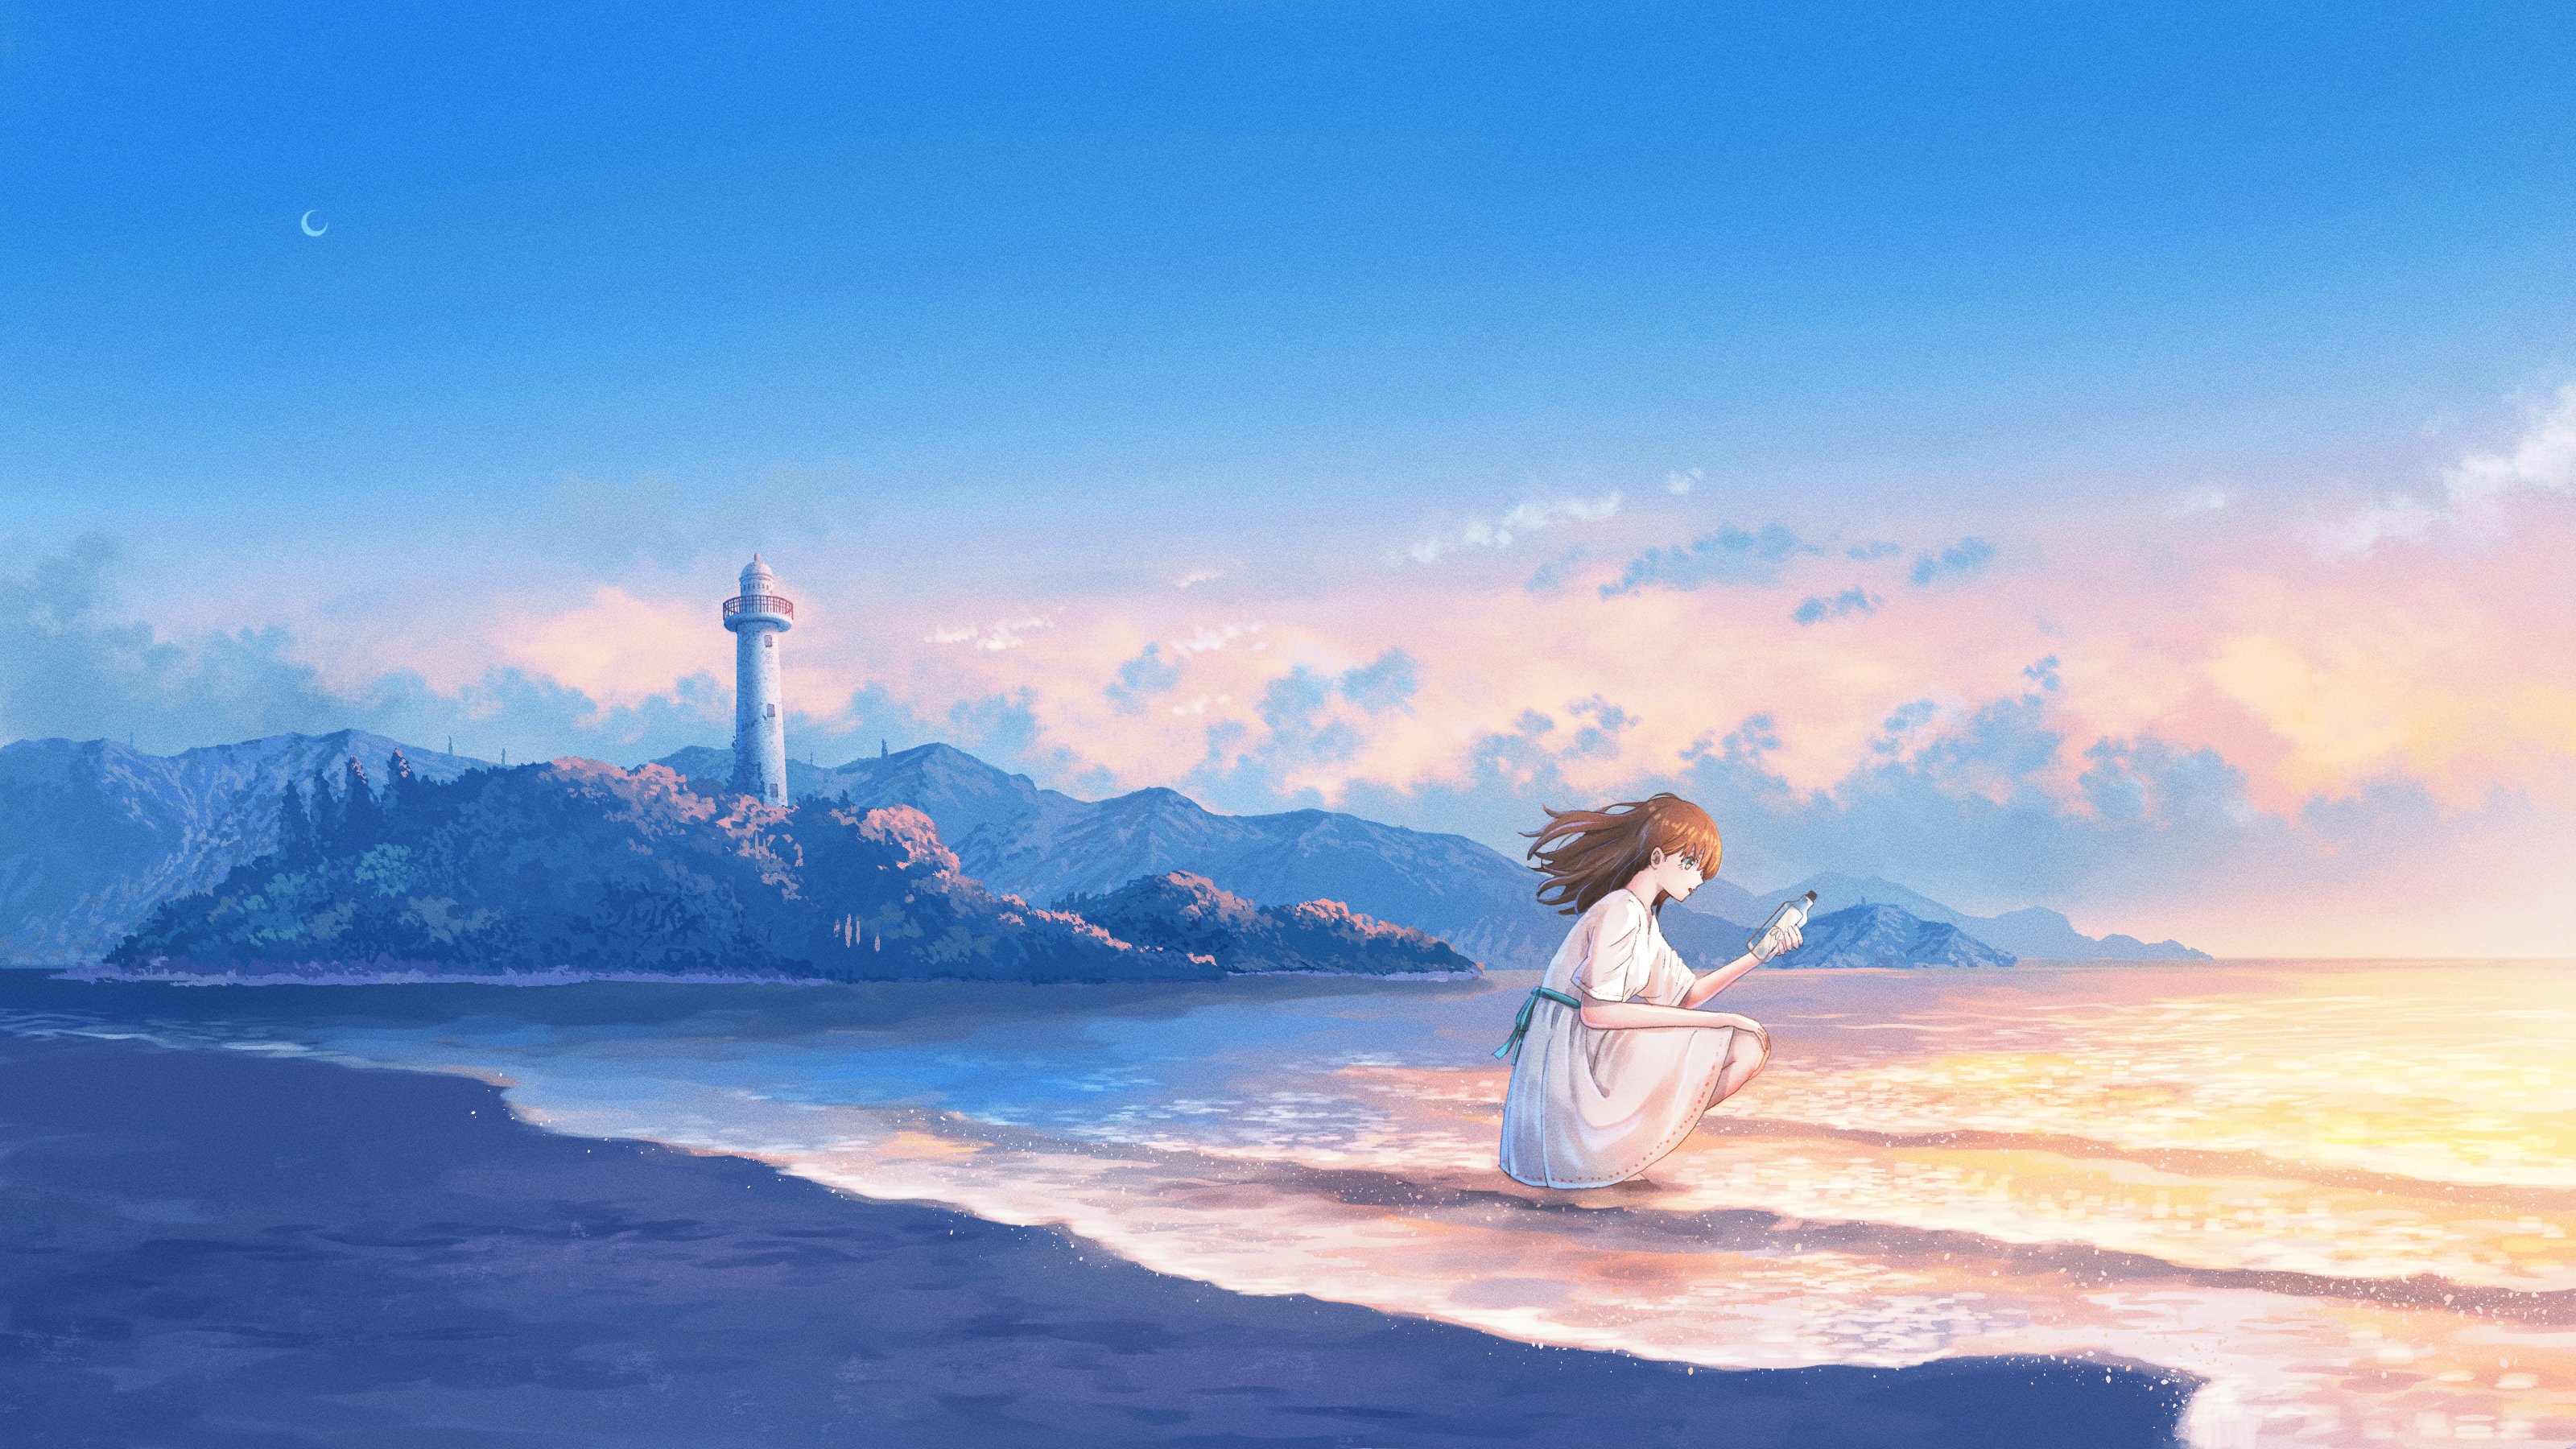 Anime Girls Beach Light House Bottles White Dress Profile Crescent Moon Moon Water Waves Sky Clouds  3200x1800